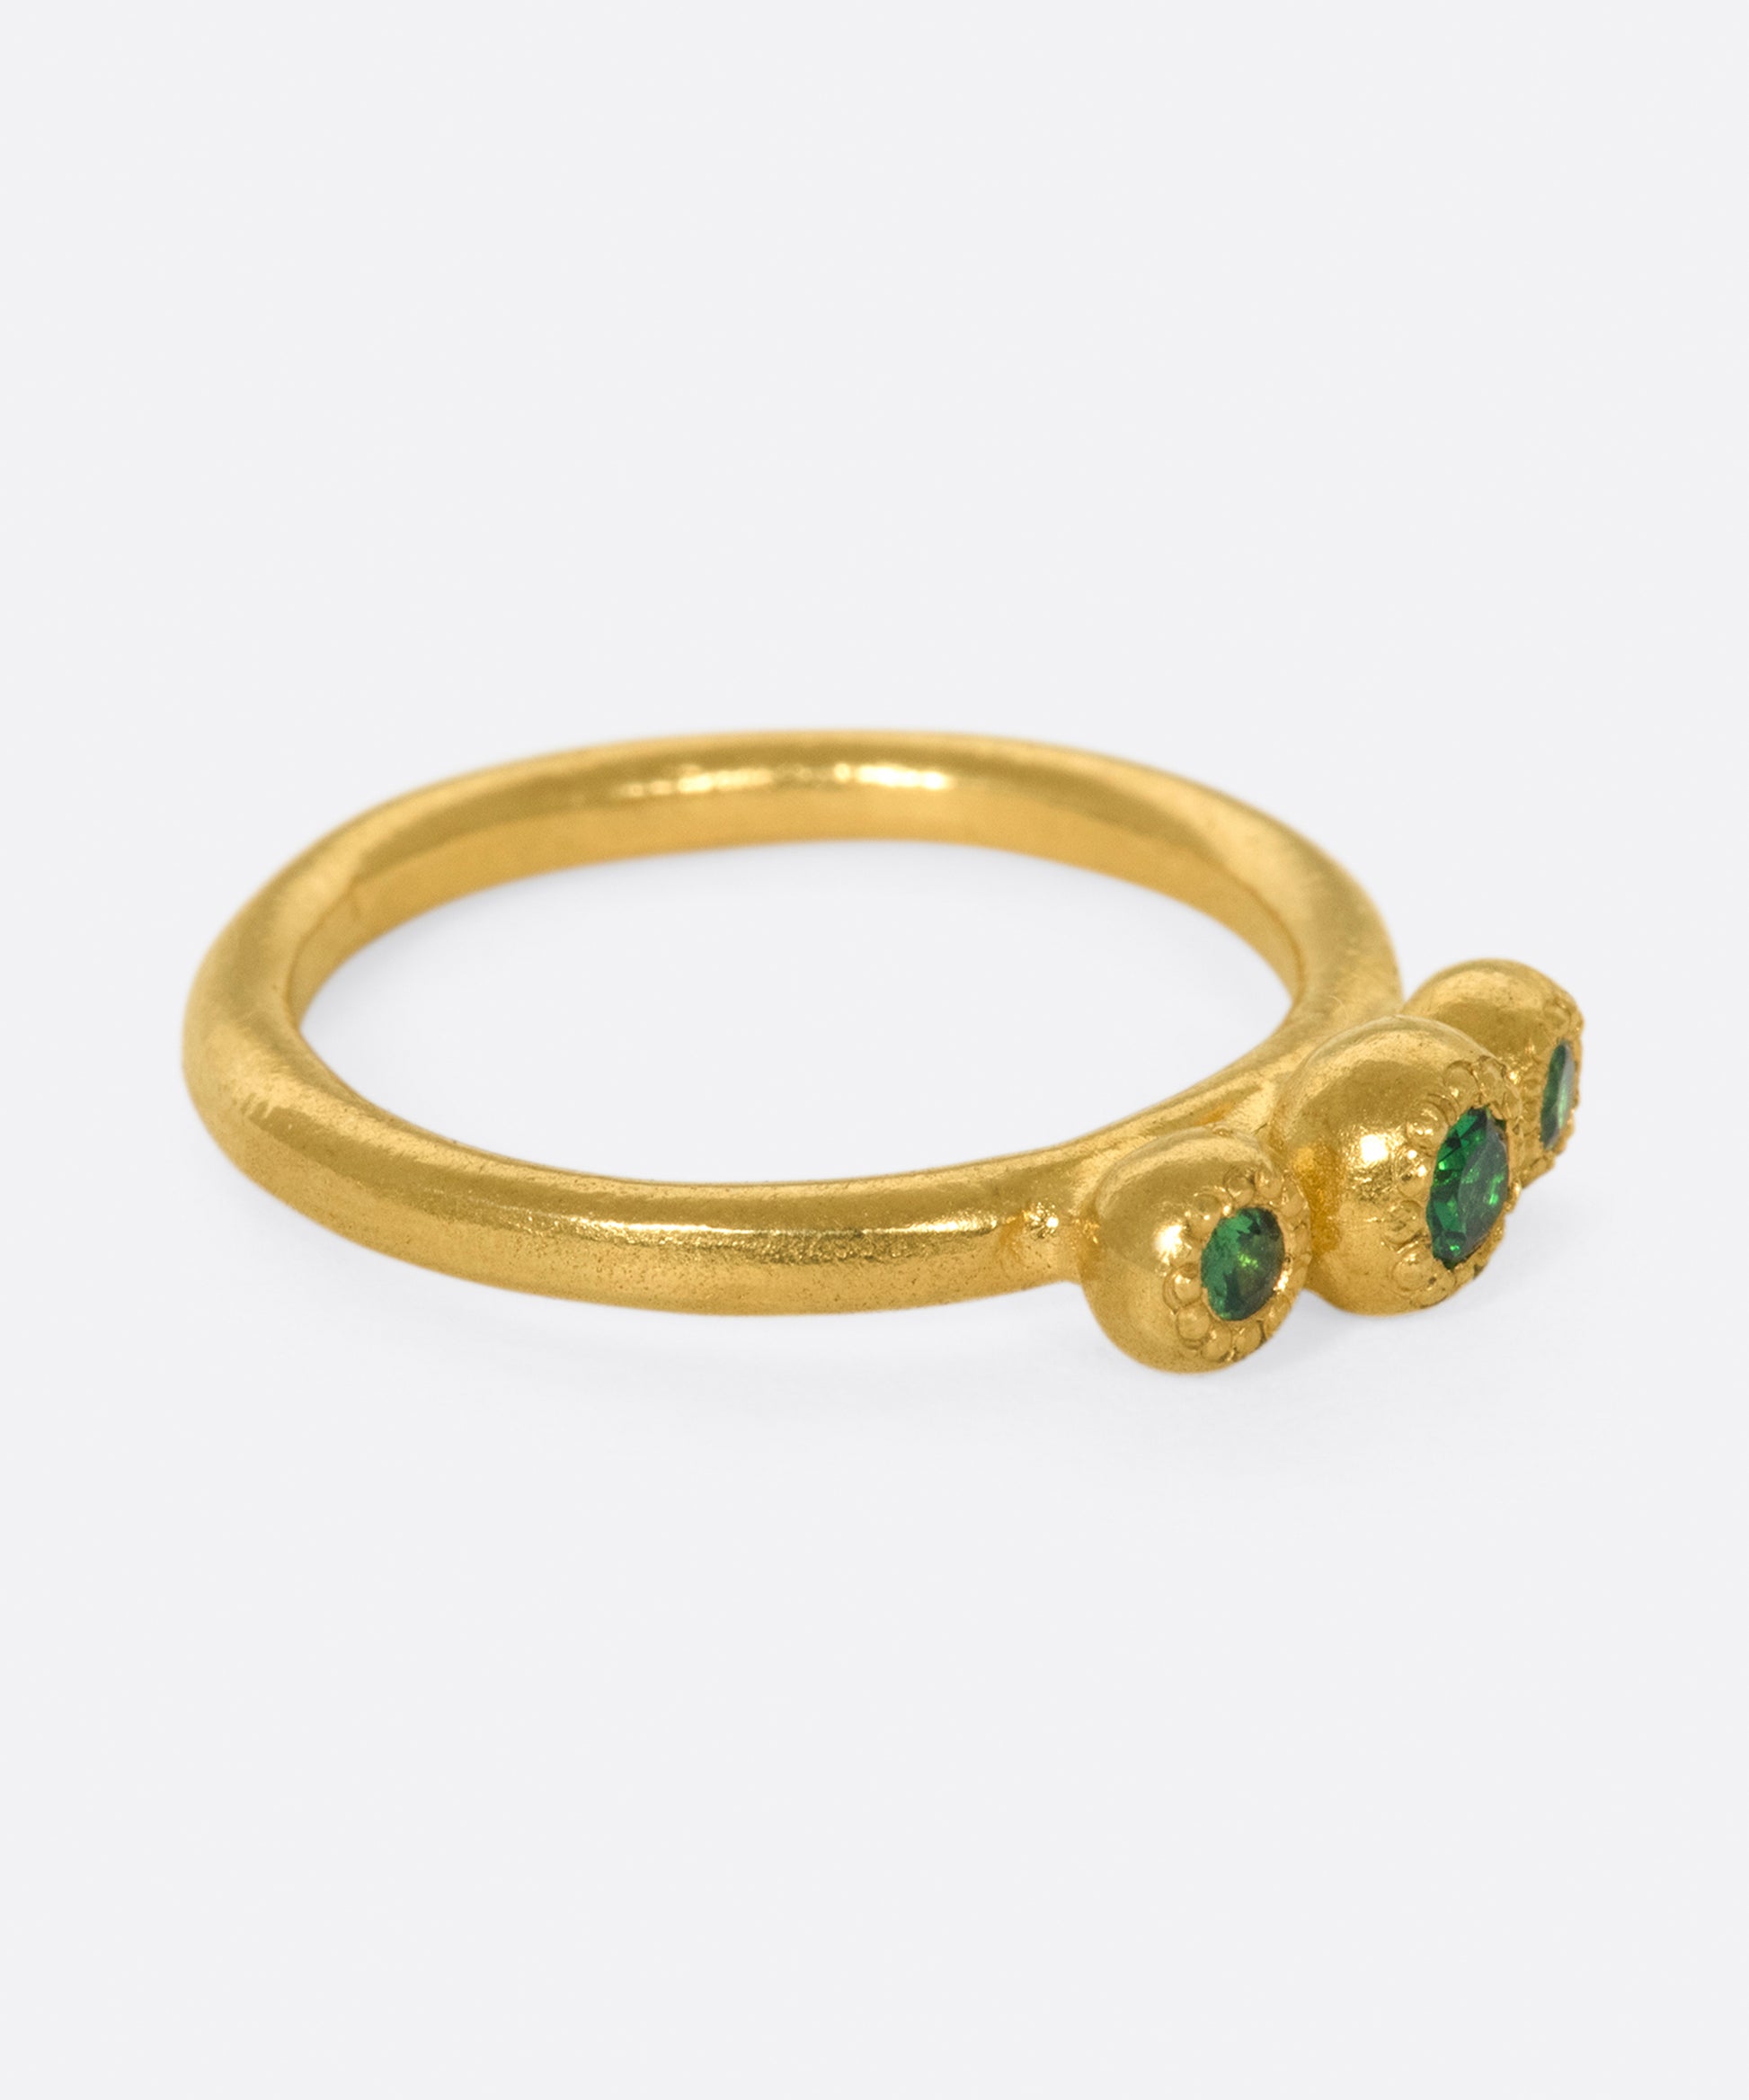 A hand sculpted three stone ring with vivid green tsavorite garnets.